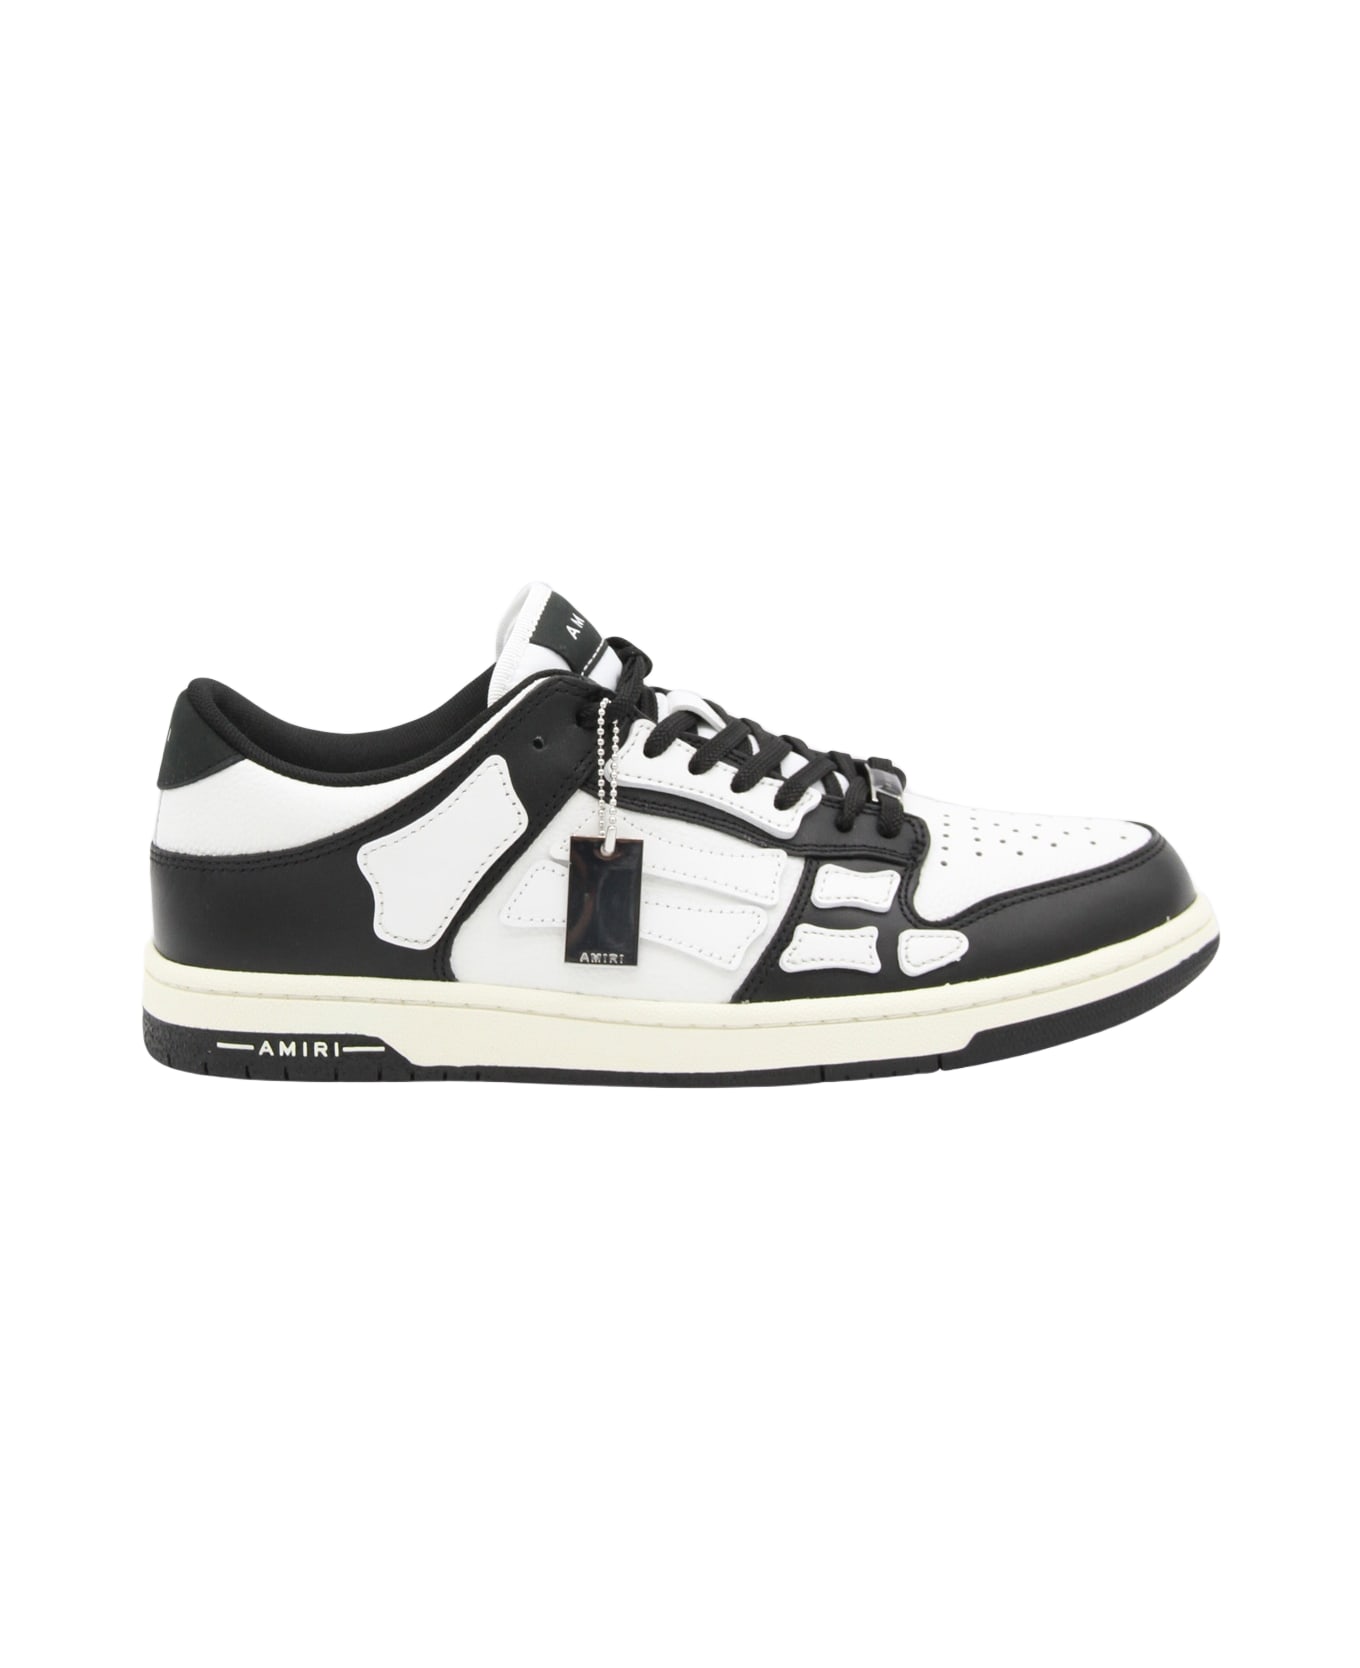 AMIRI Black And White Leather Skel Sneakers - Black